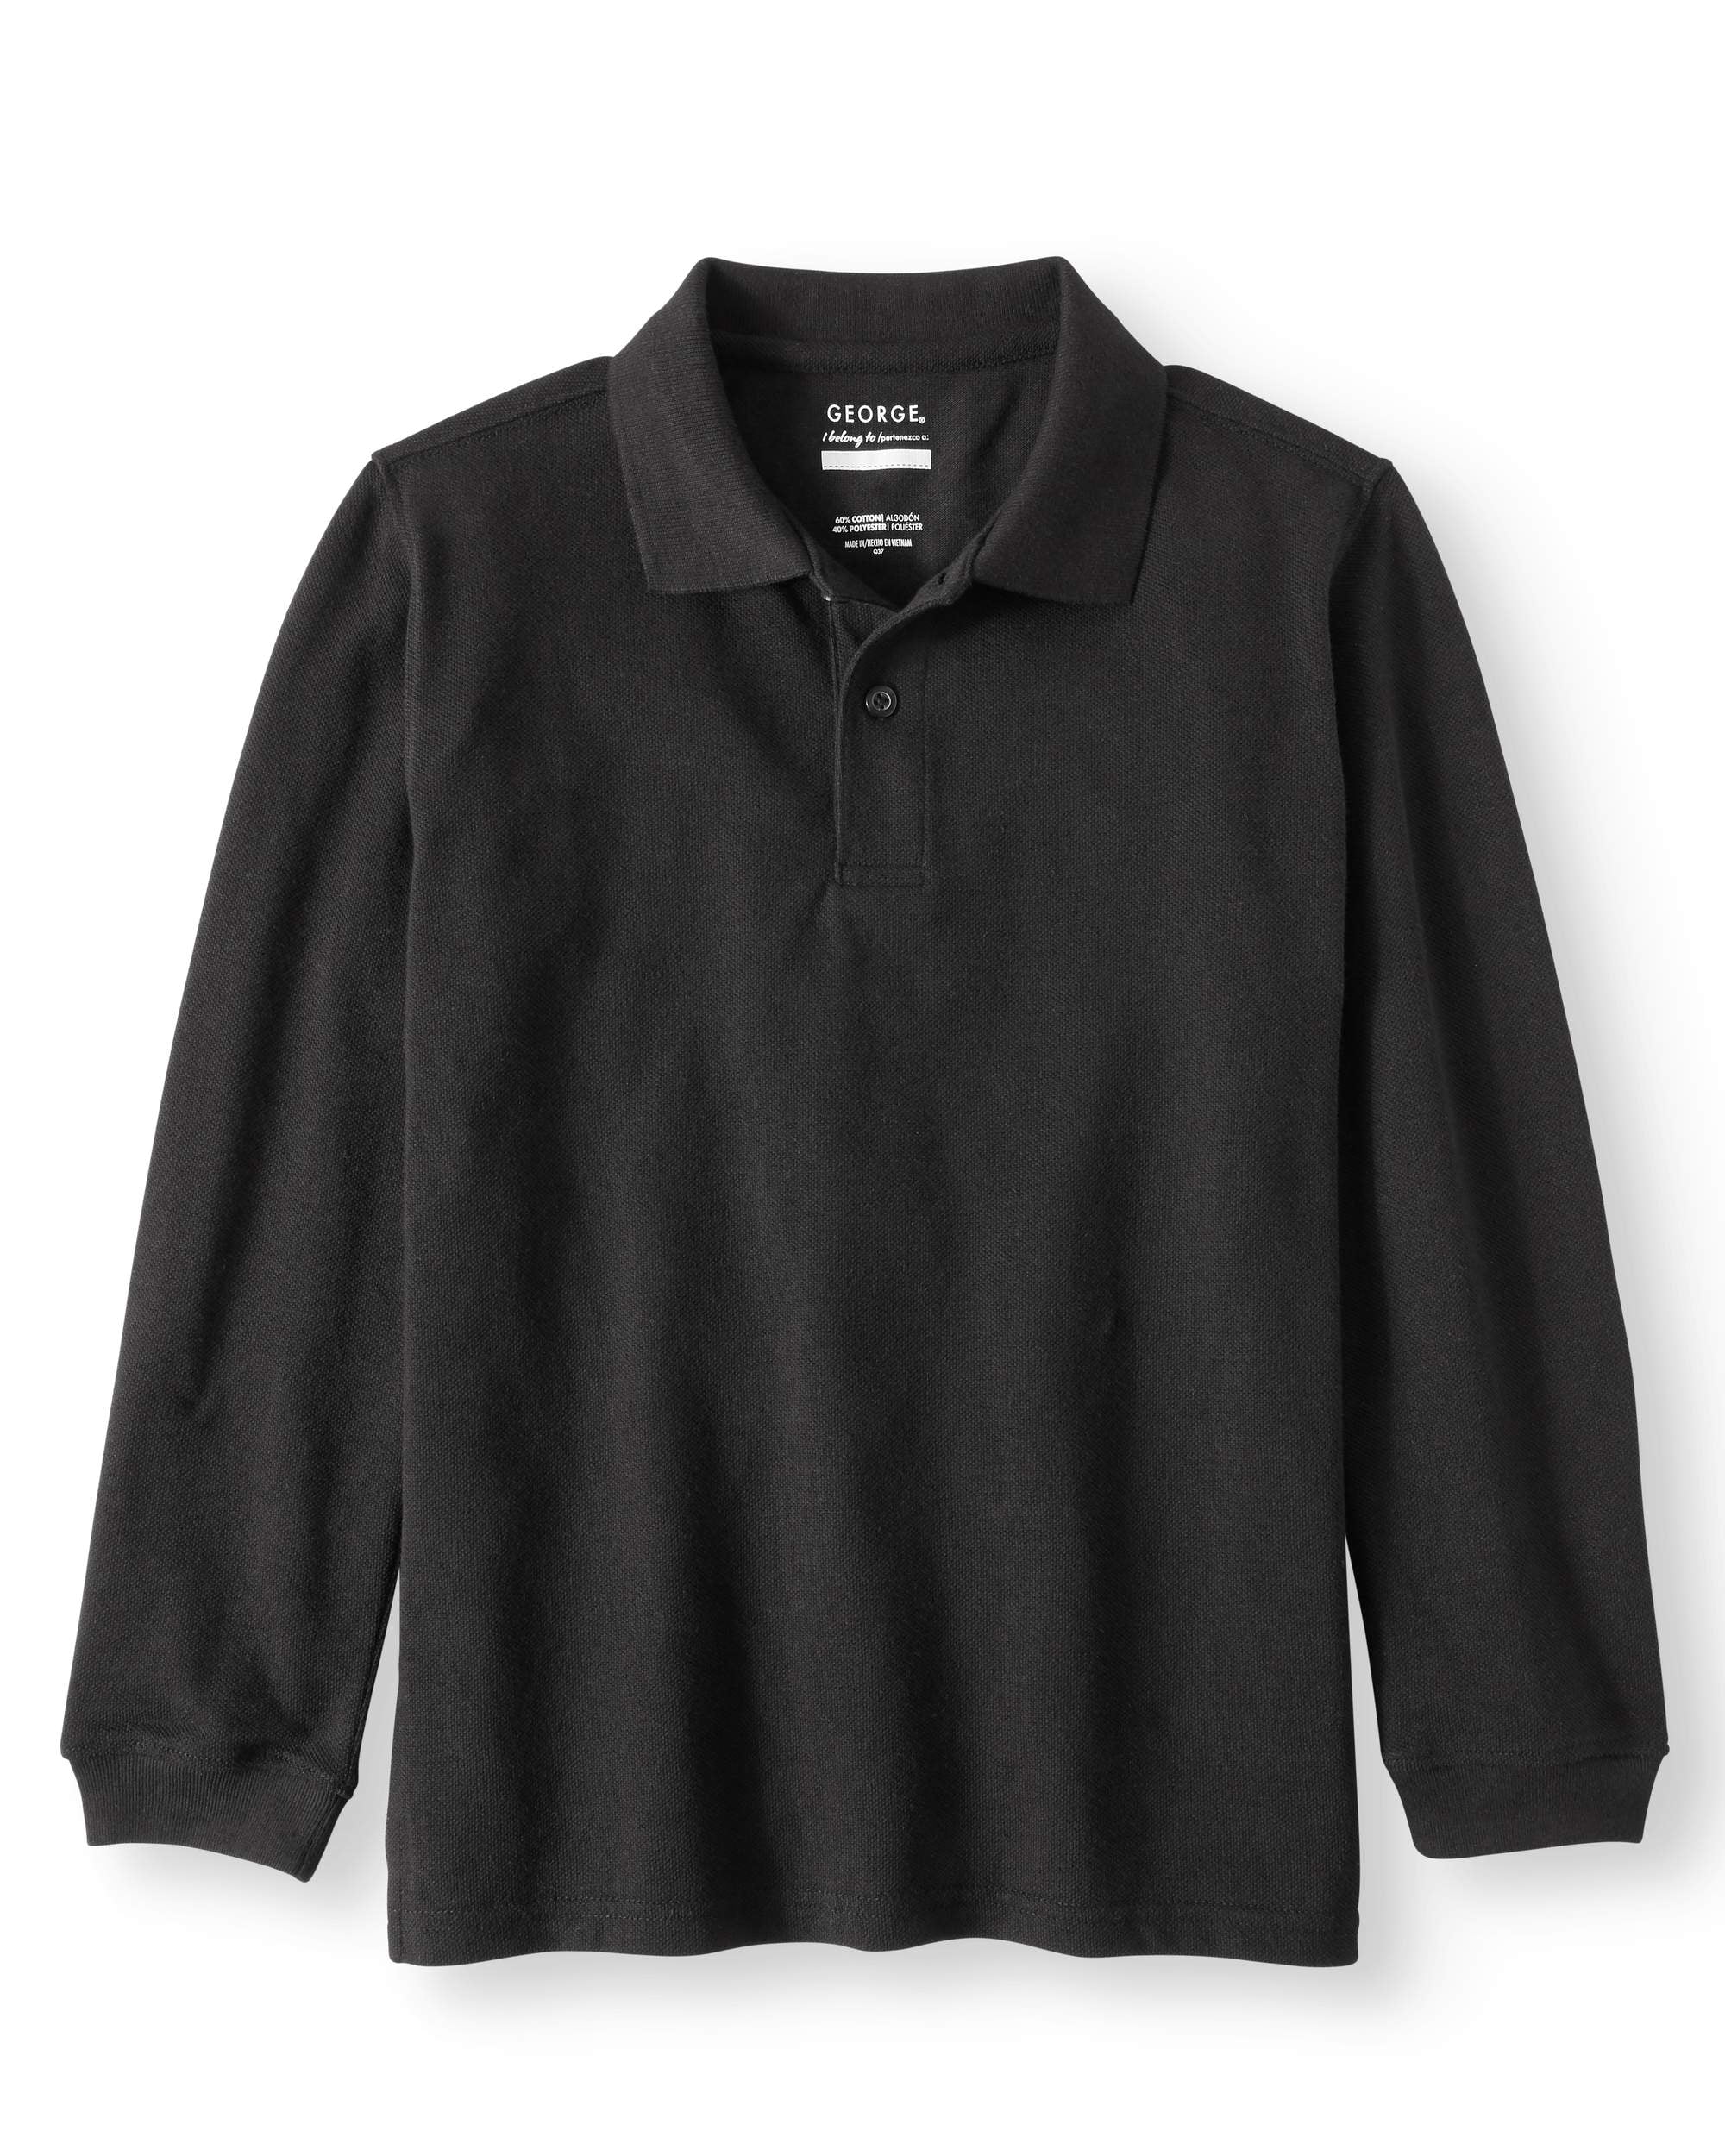 GEORGE - George Boys School Uniform Long Sleeve Pique Polo Shirt ...